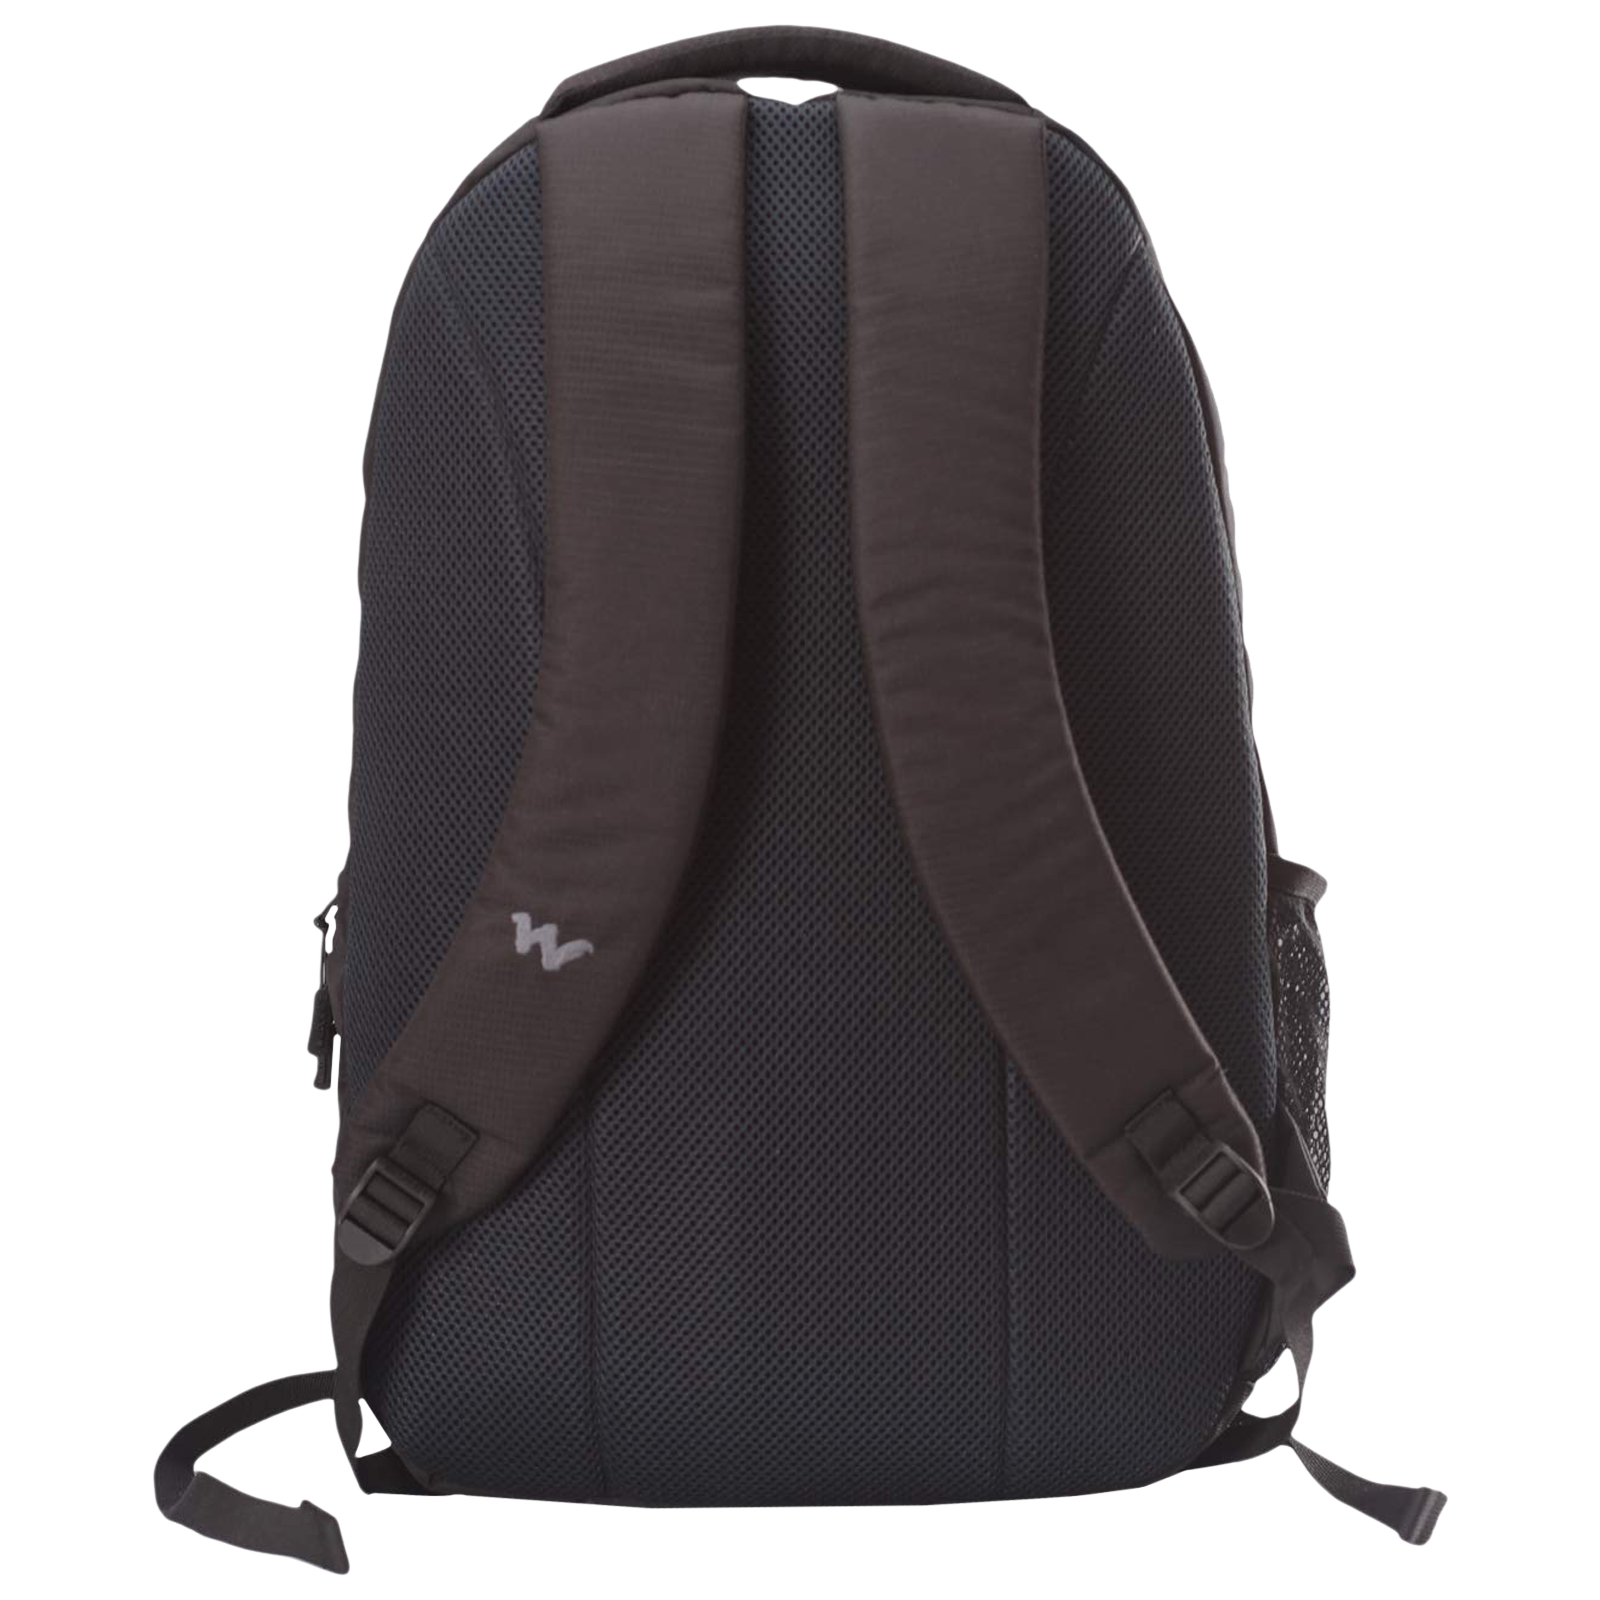 Buy Colossal 40L Backpack Teal Black Online | Wildcraft